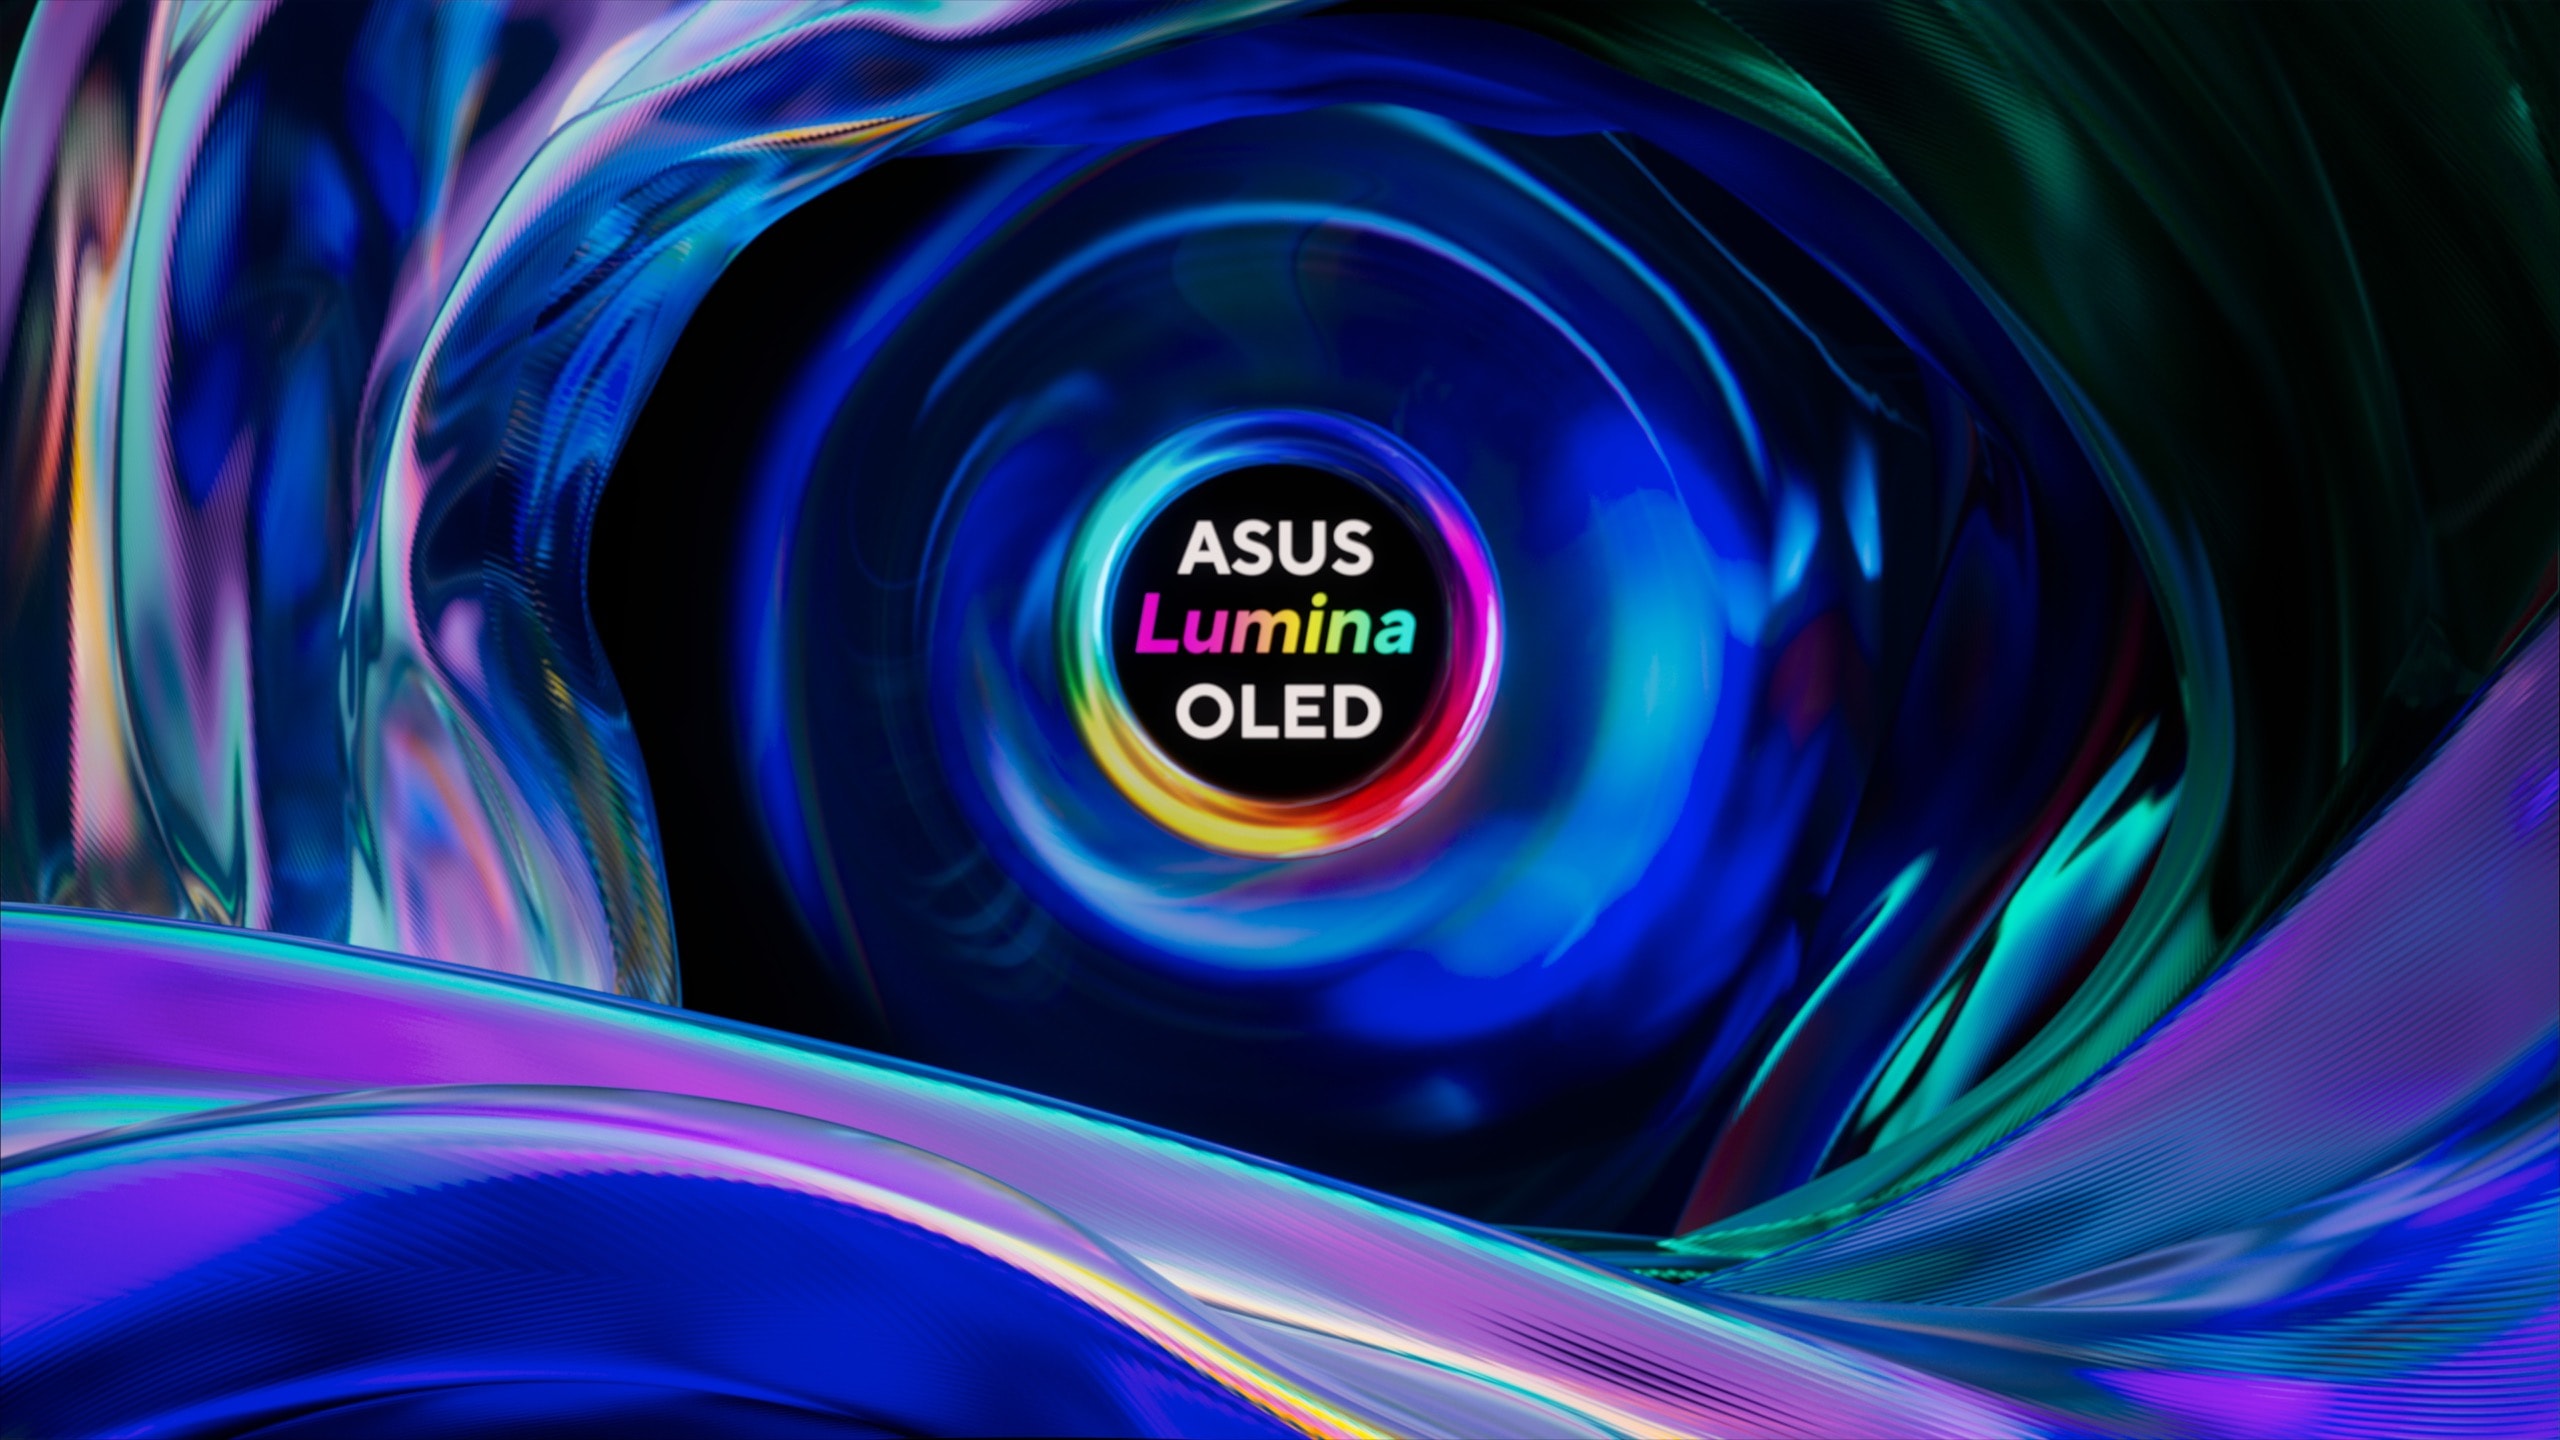 ASUS Lumina OLED – Experience Visuals Like Never Before